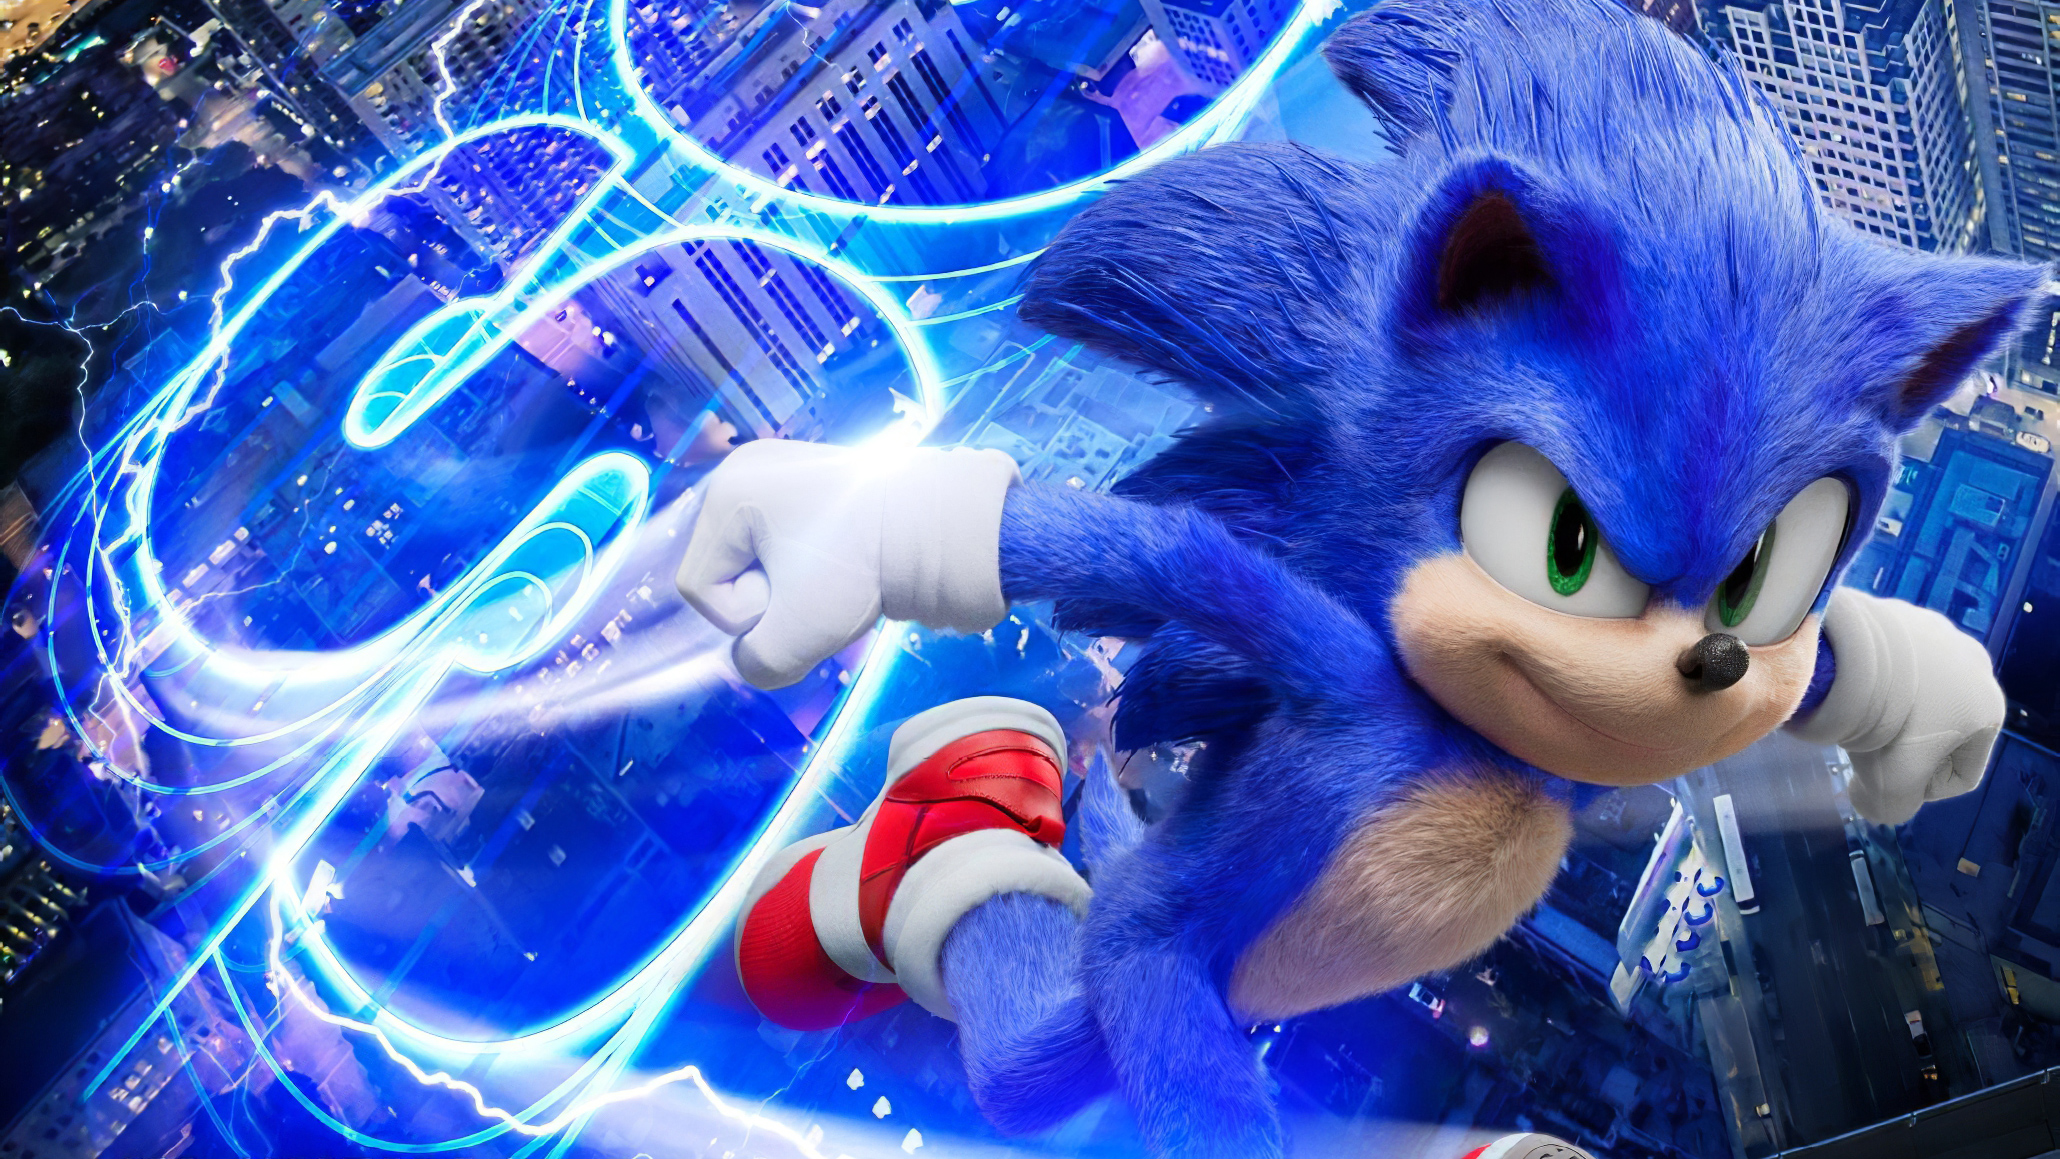 Sonic The Hedgehog 2020movie Wallpaper,HD Movies Wallpapers,4k ...